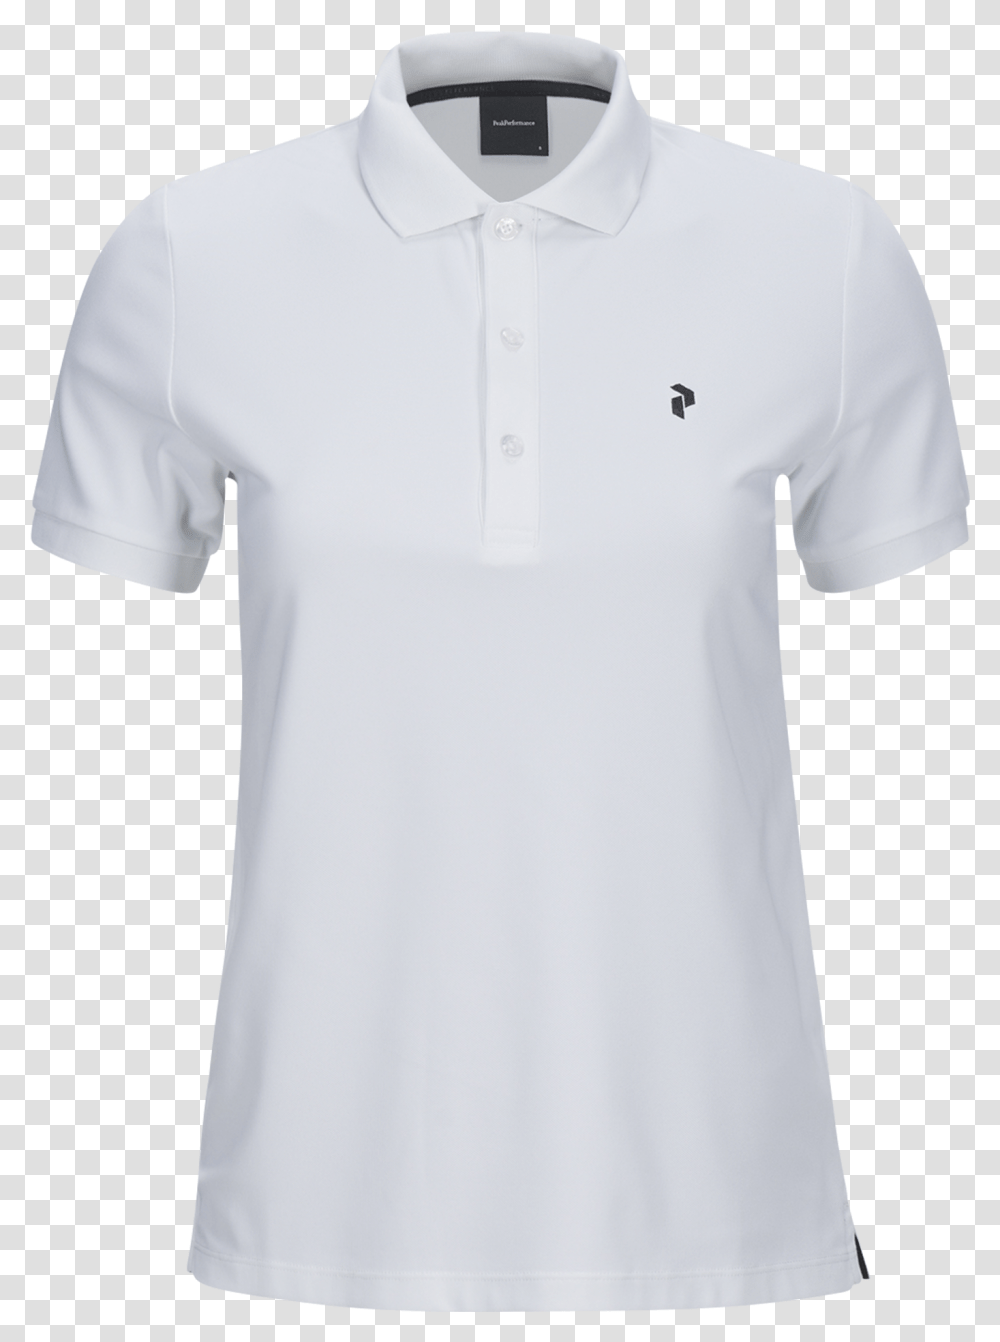 Nike Golf White Polo, Shirt, Person, Home Decor Transparent Png